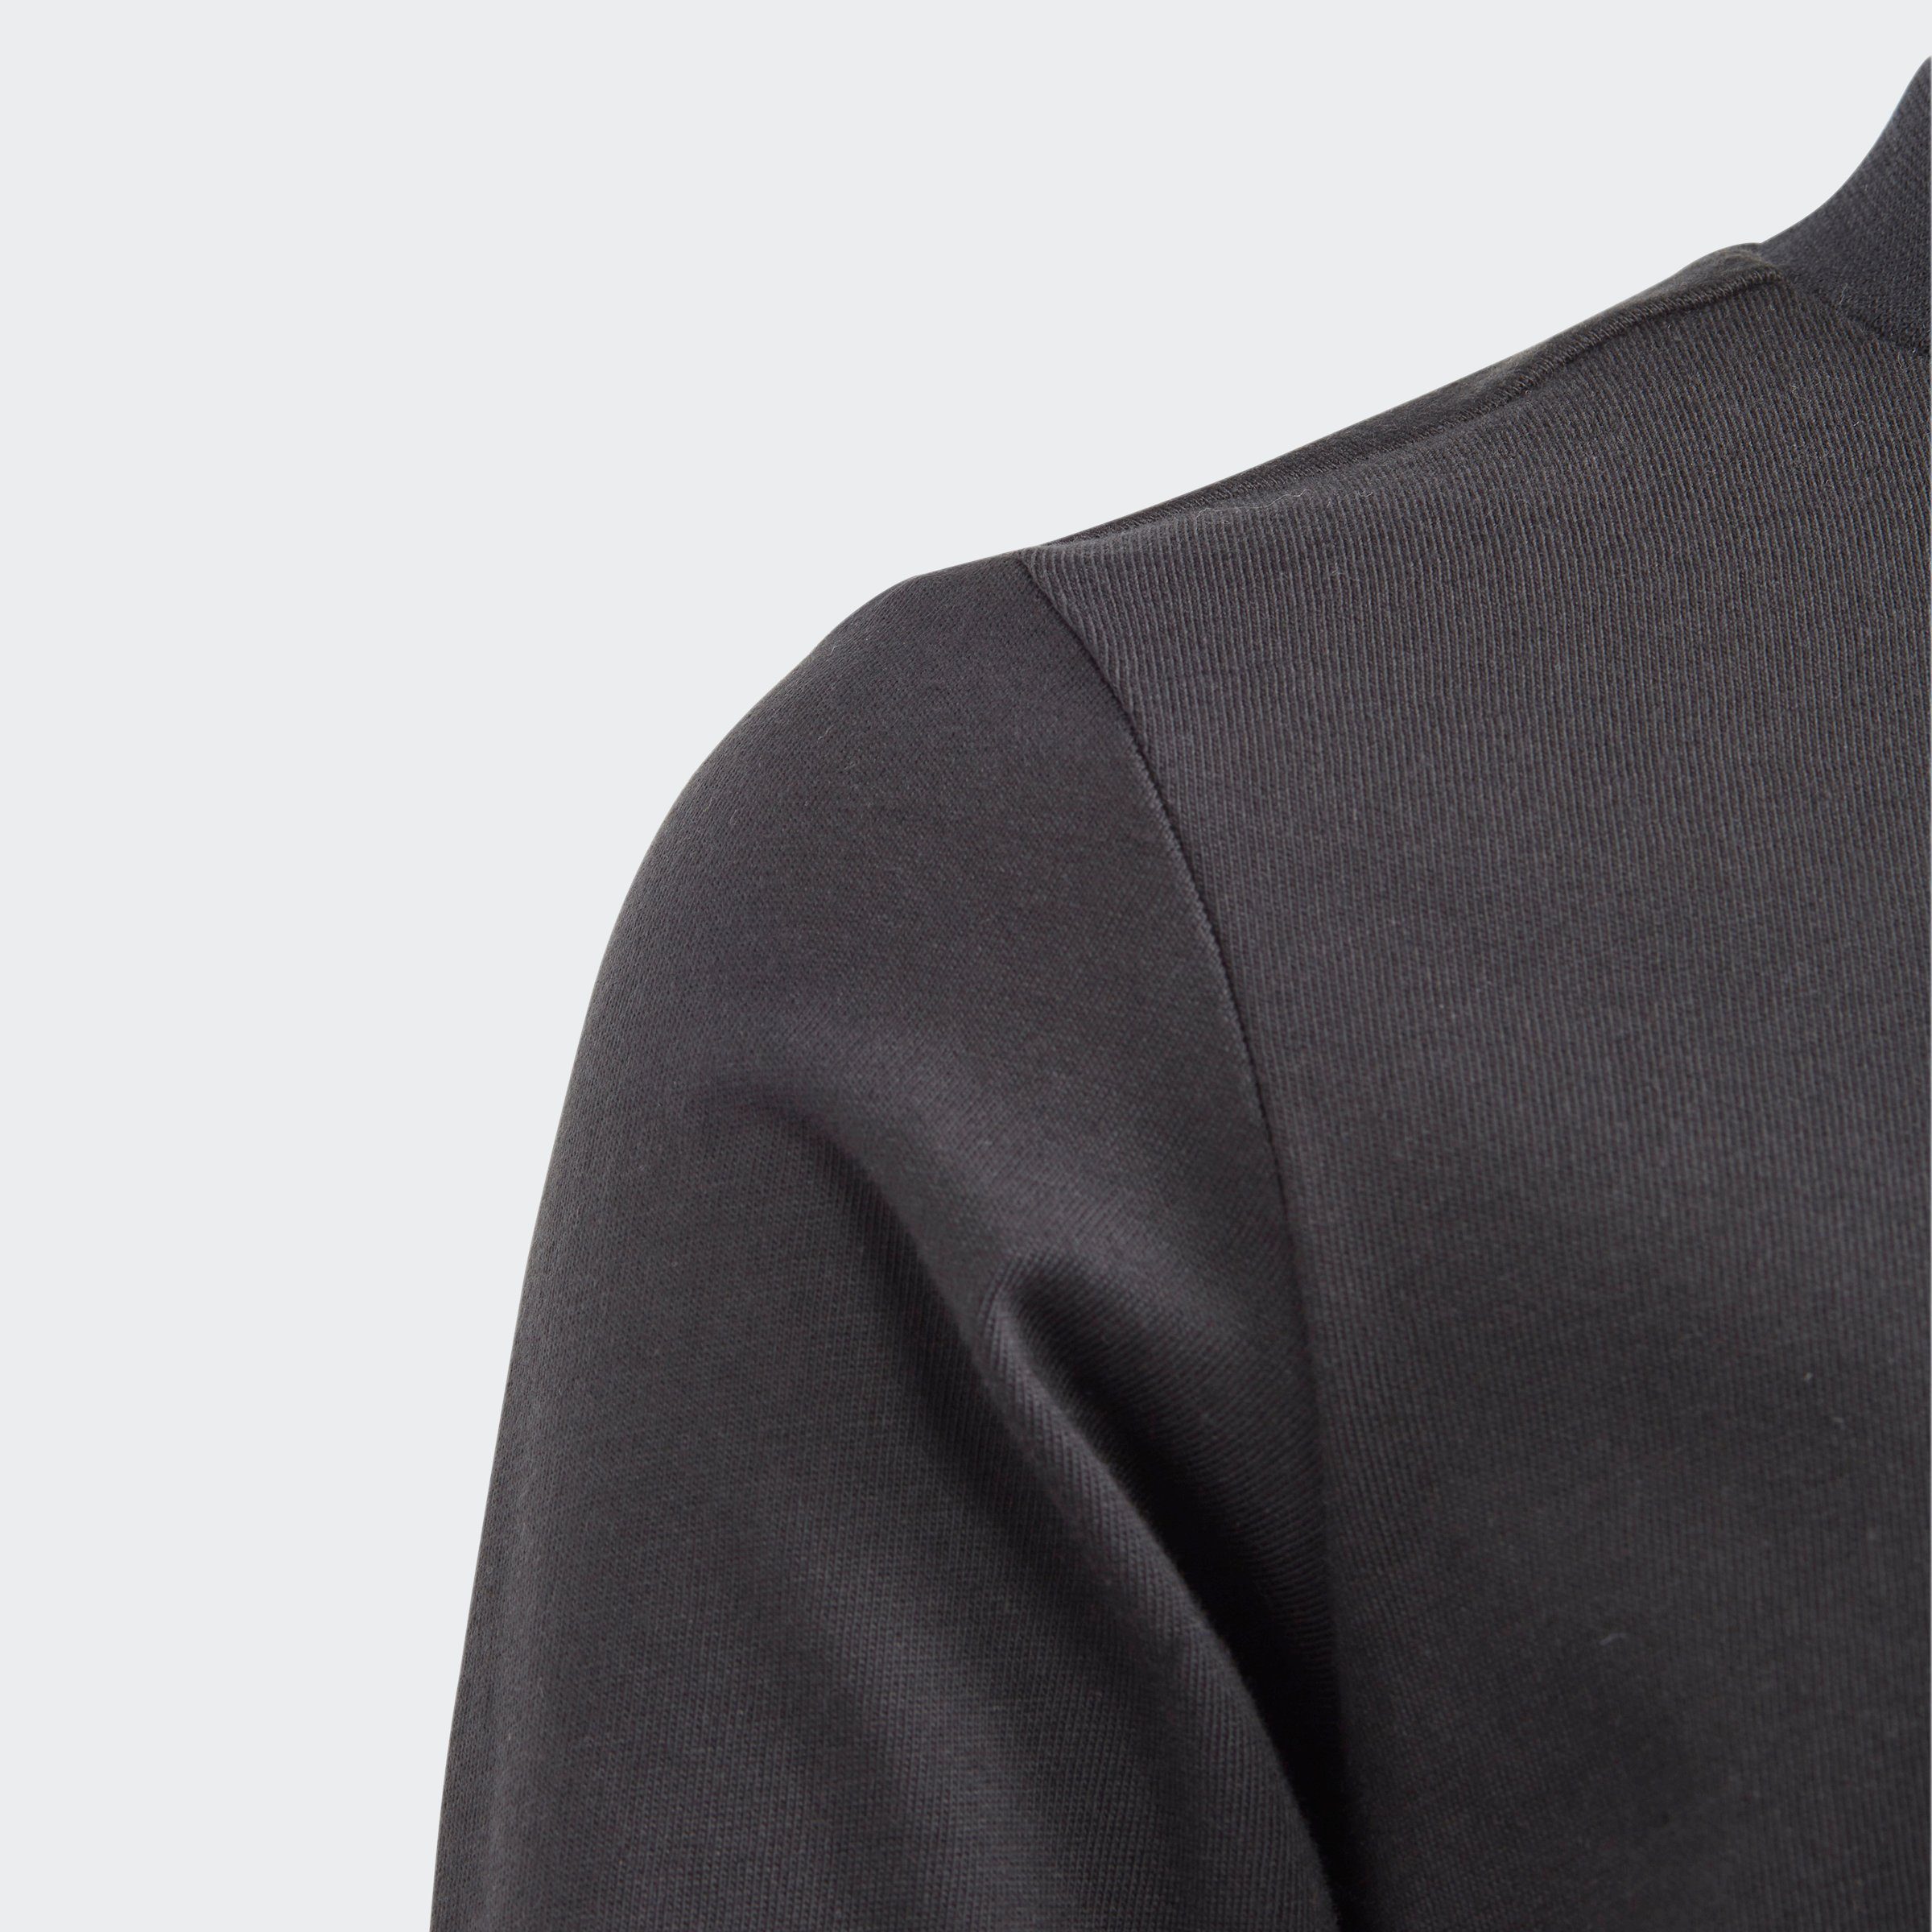 Originals LONGSLEEVE BLACK Sweatshirt adidas